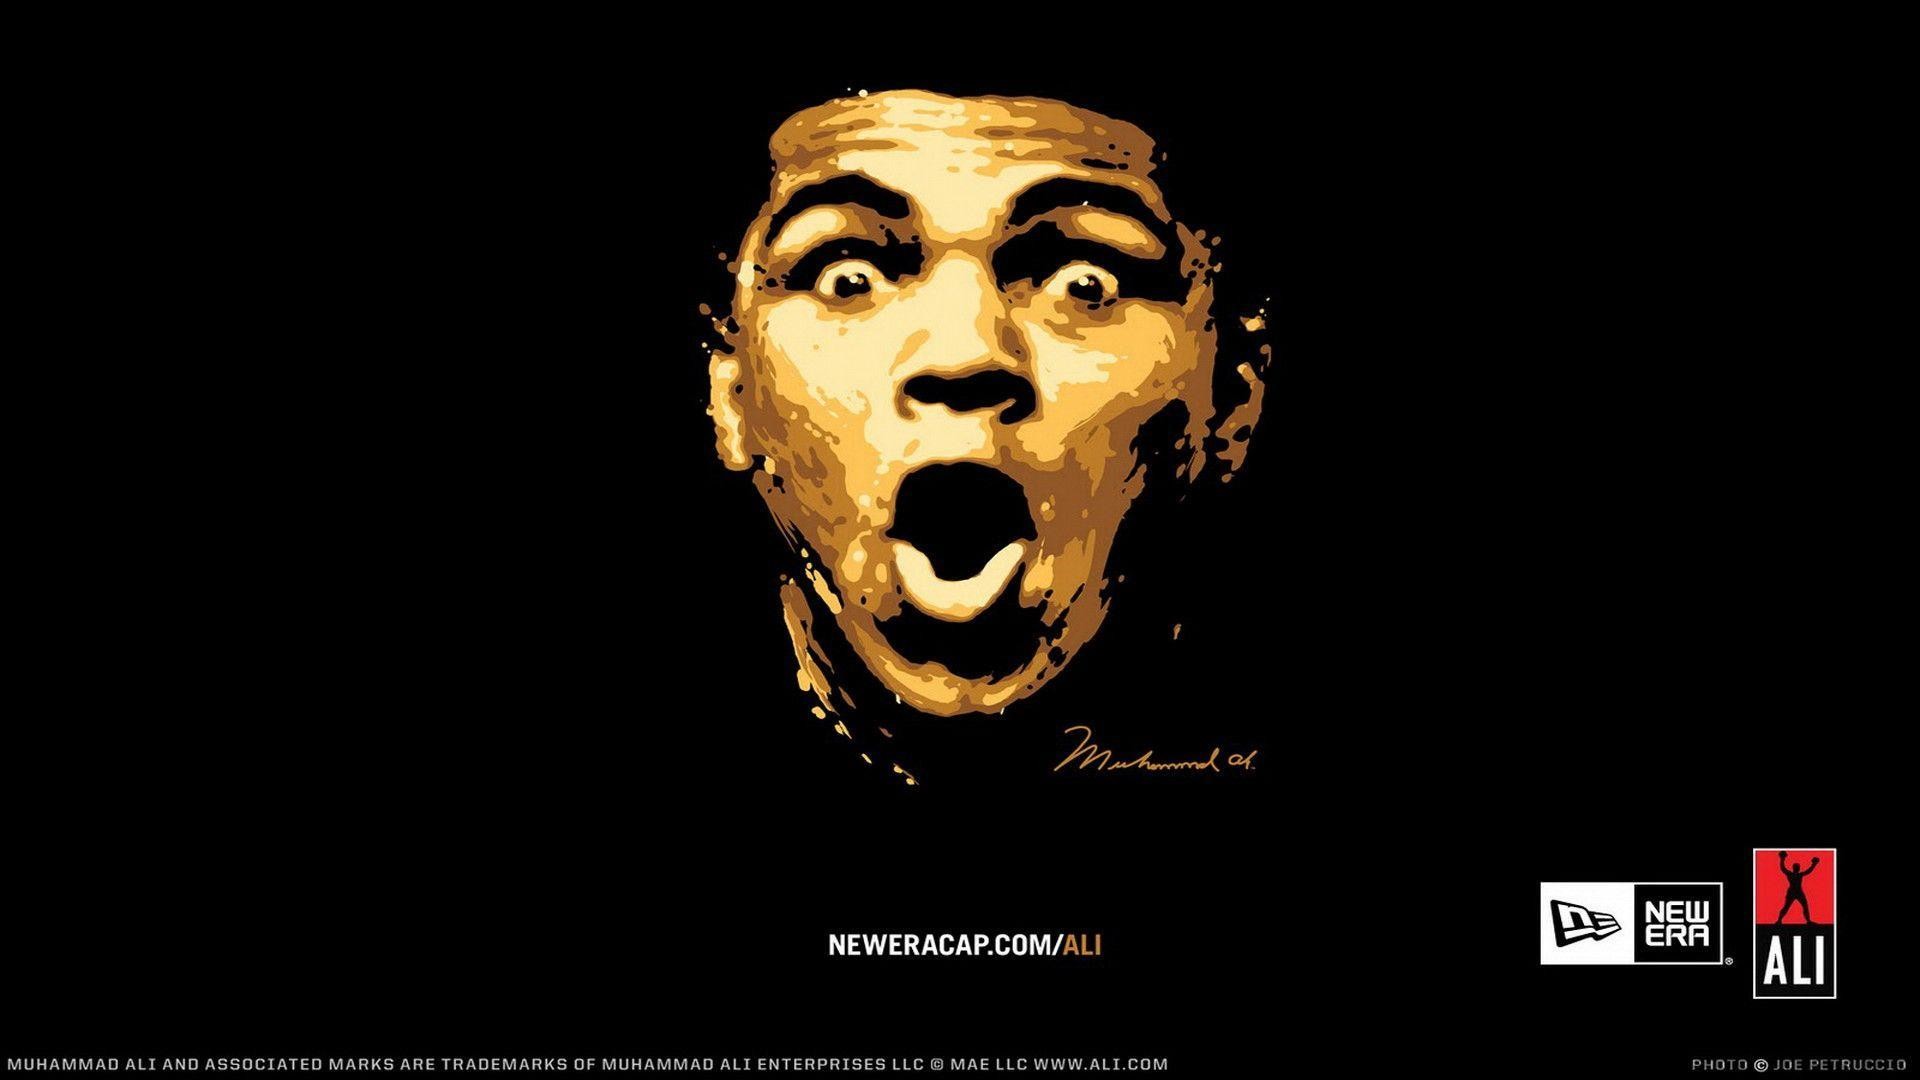 Images For > Muhammad Ali Wallpaper Hd